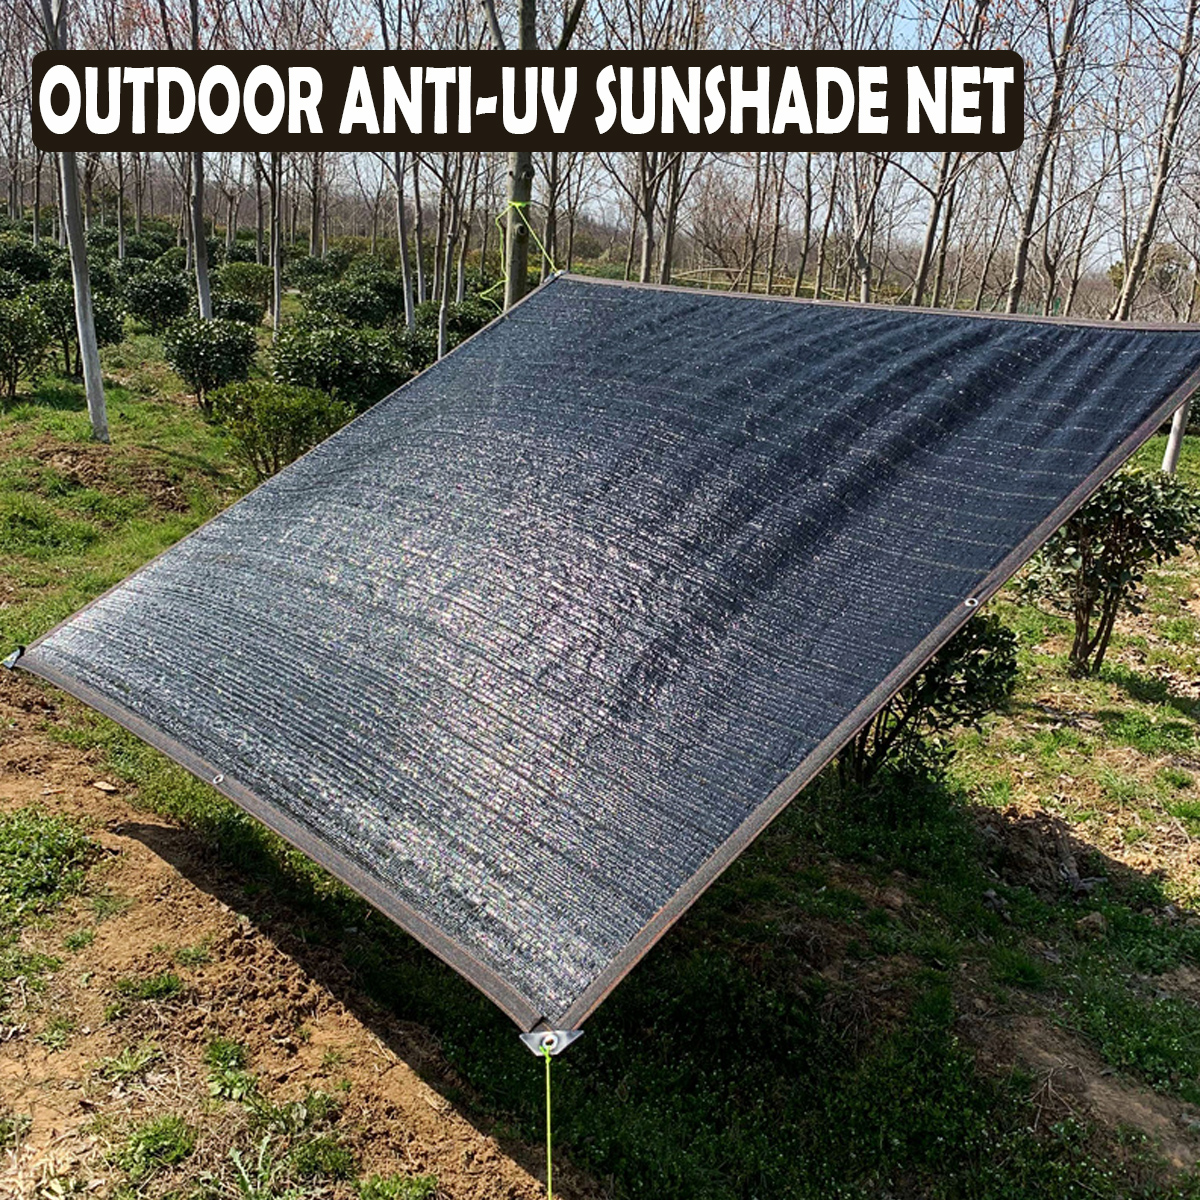 Anti-UV-Sunshade-Net-Outdoor-Garden-Sunscreen-Sunblock-Shade-Cloth-Net-Plant-Greenhouse-Cover-Car-Co-1611437-3